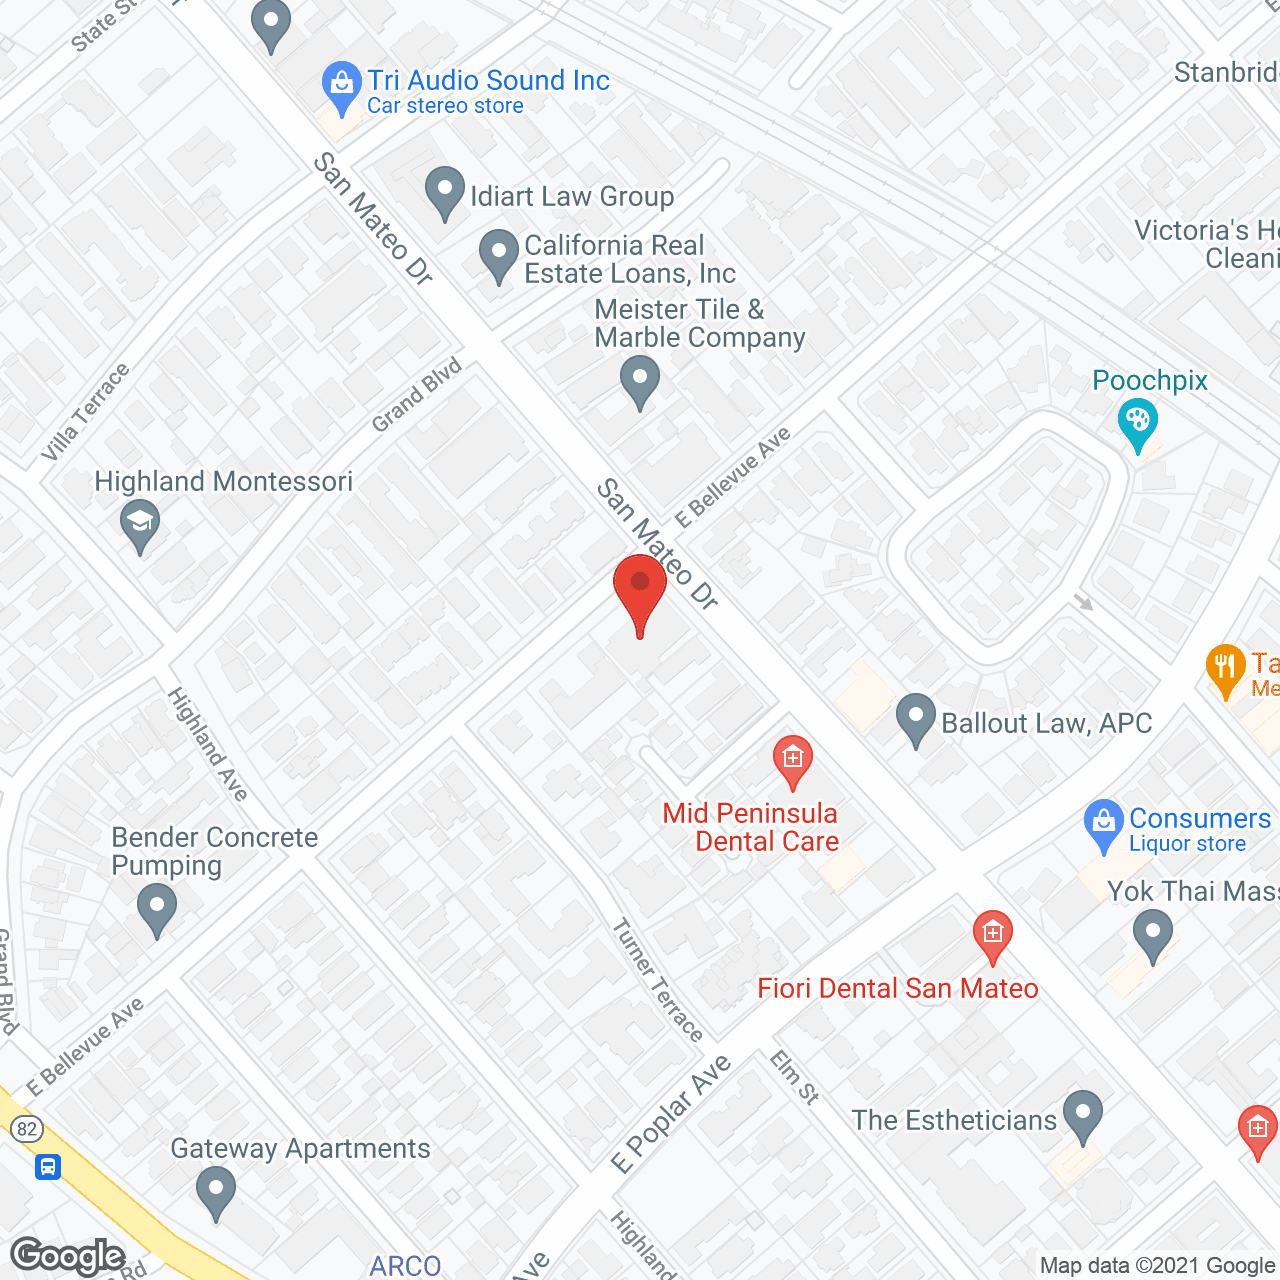 San Mateo Convalescent Hospital in google map